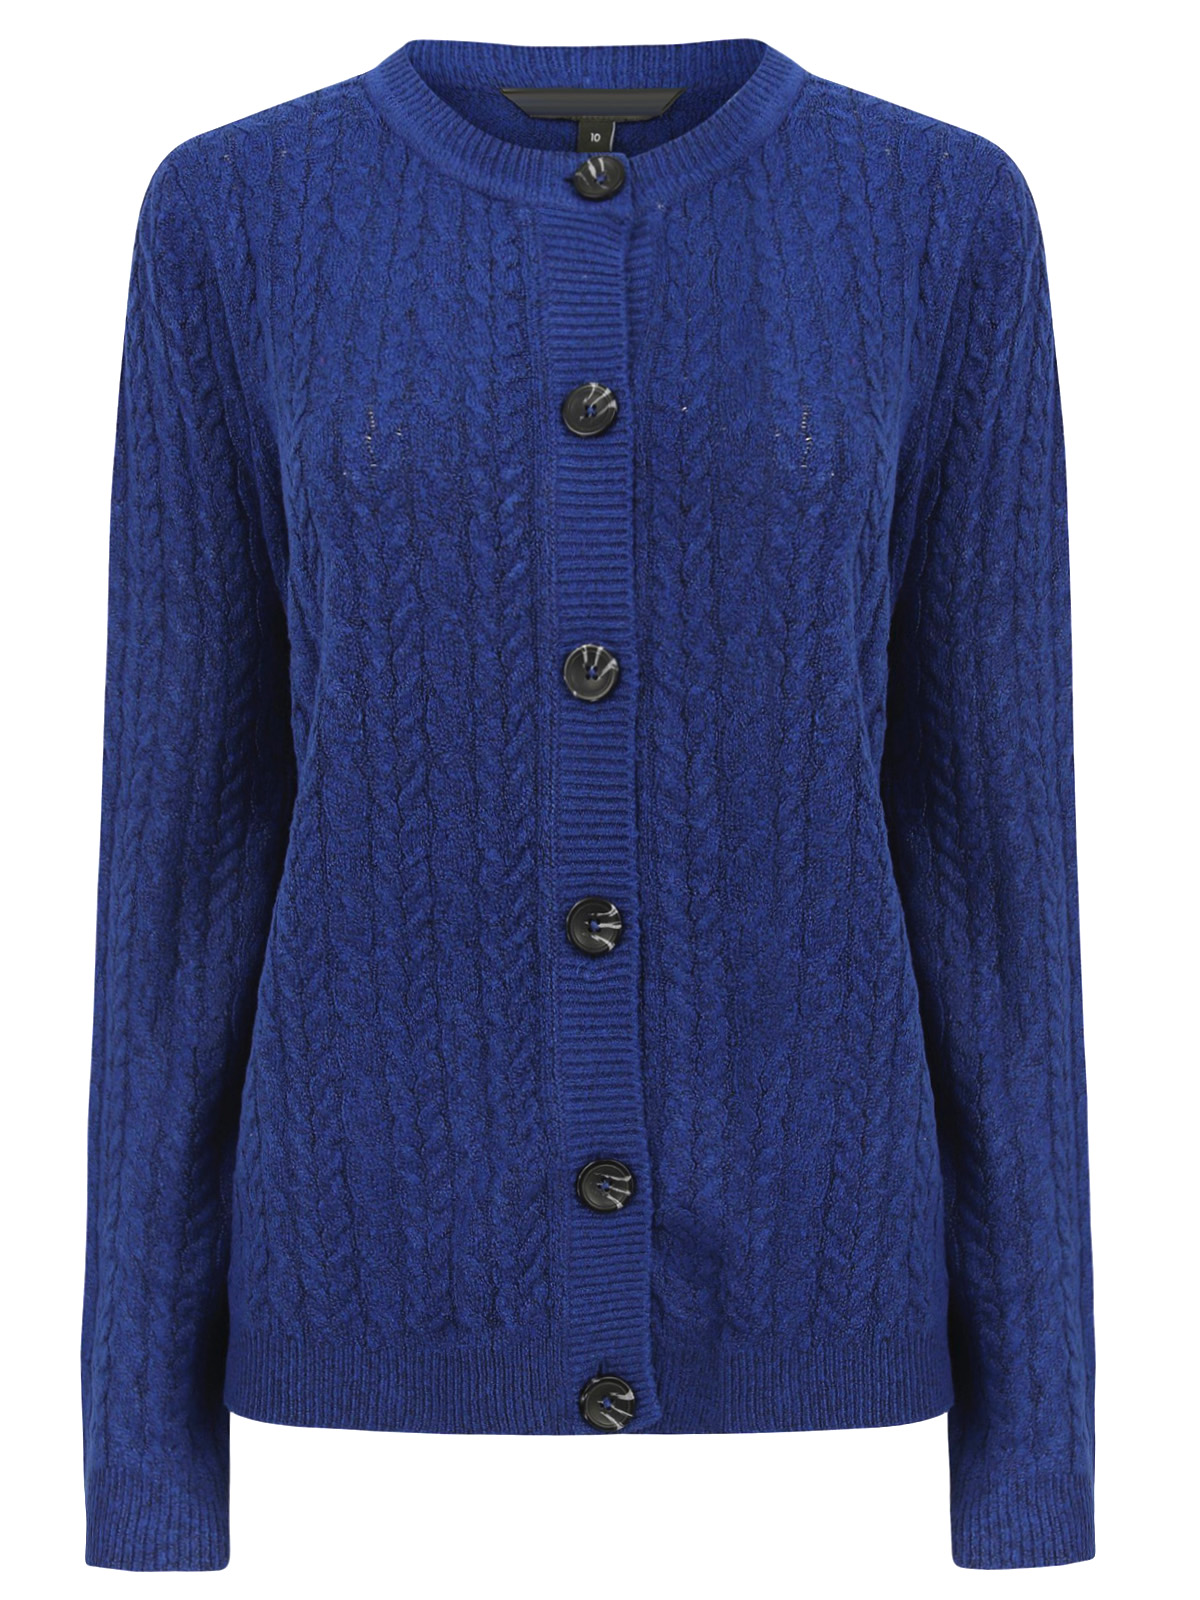 Bonmarché - - Bonmarché ROYAL-BLUE Knitted Long Sleeve Cardigan - Size ...